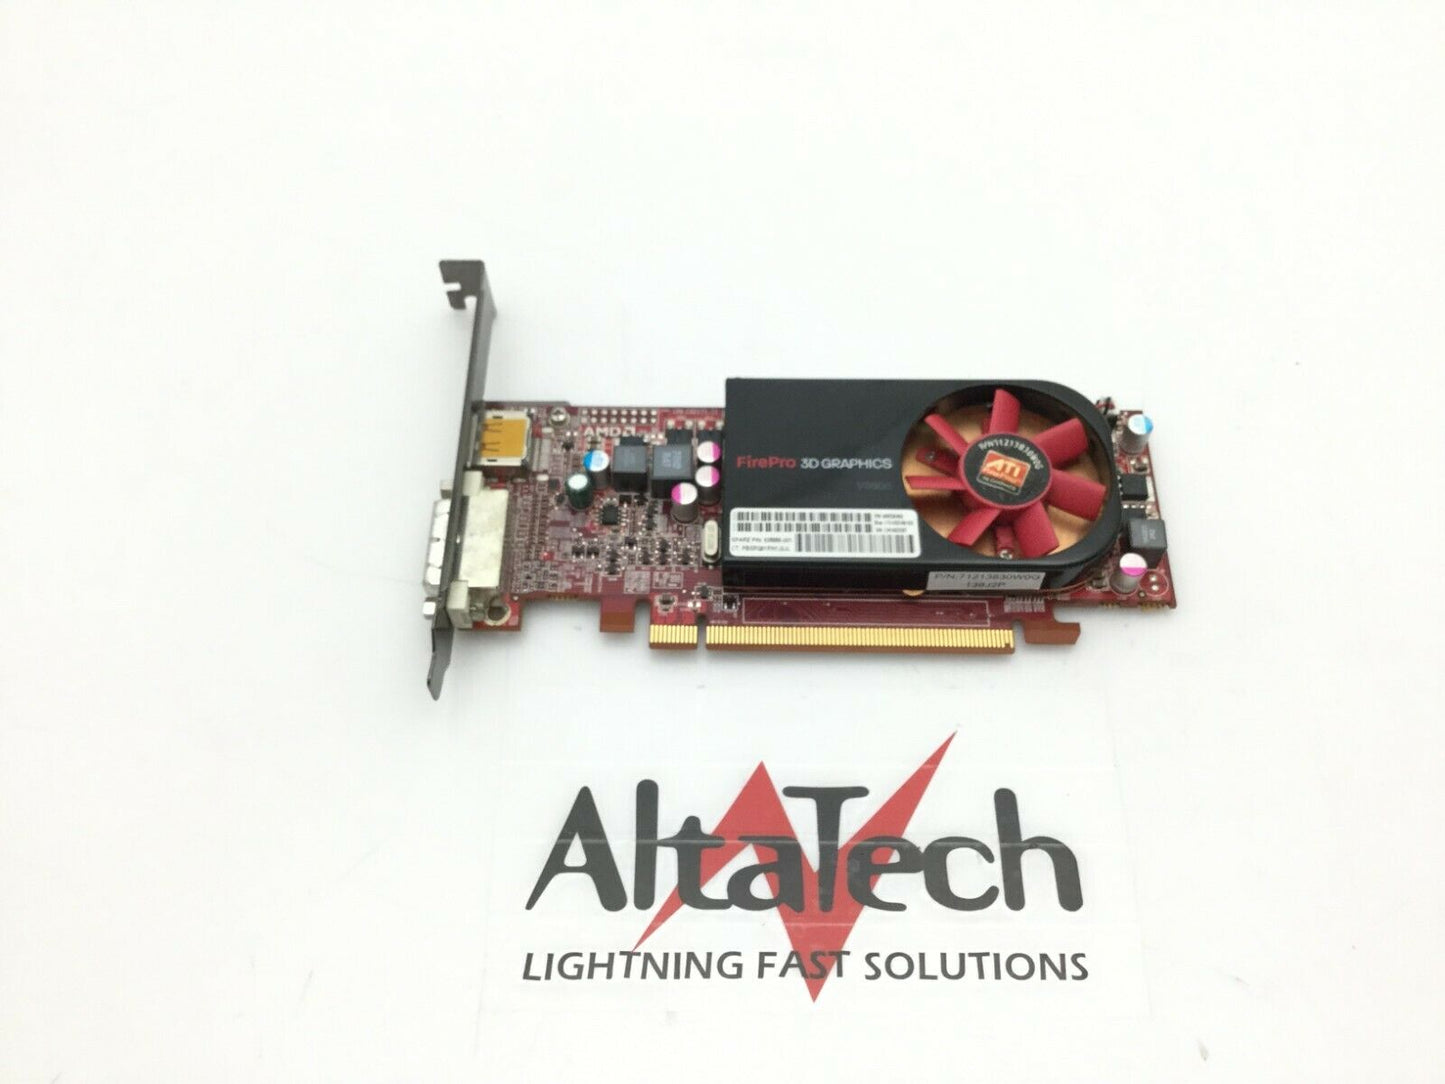 HP 608886-001 ATI FirePro V3800 512MB DDR3 PCI-e Graphics Card, Used